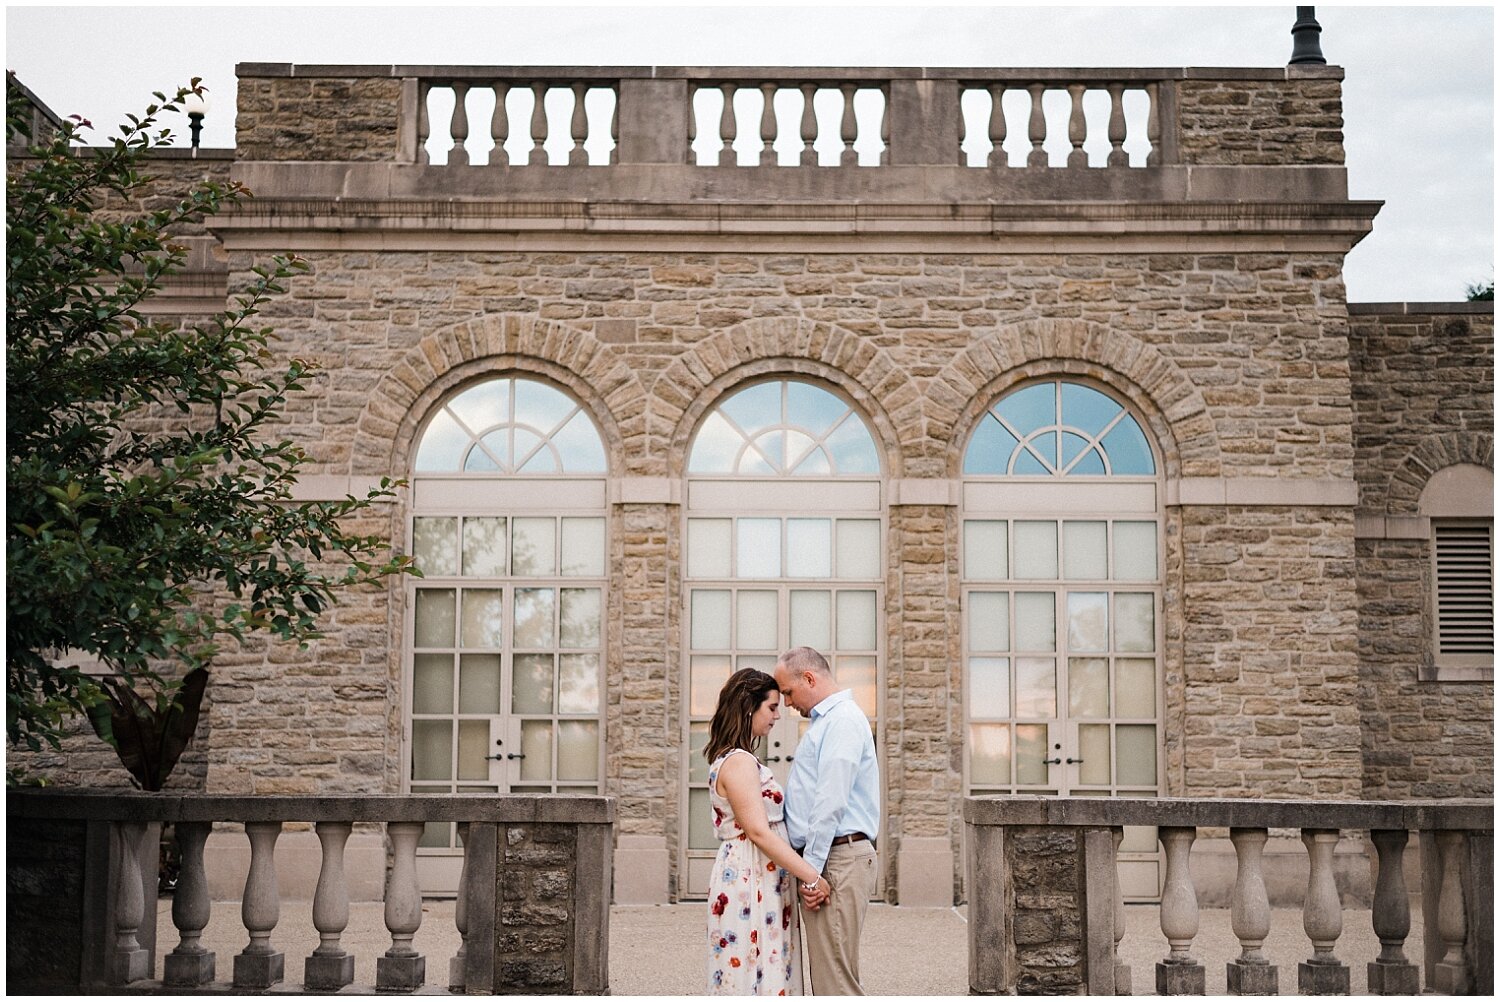 Ault Park Engagement Portraits | Cincinnati, Ohio